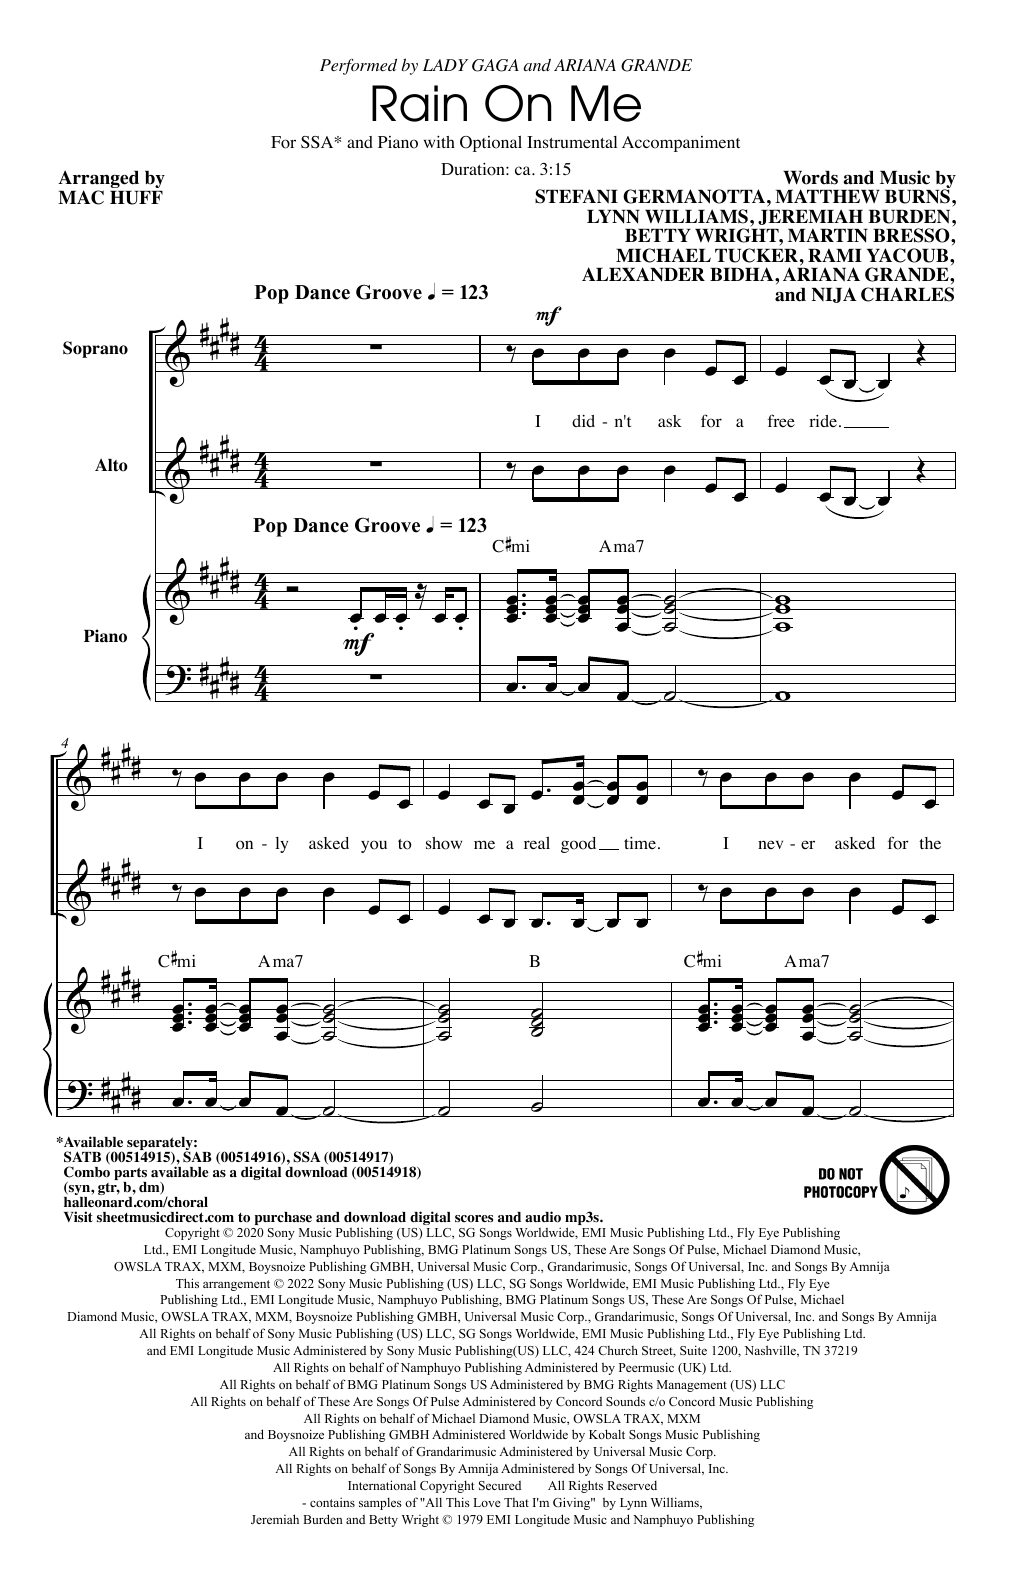 Lady Gaga & Ariana Grande Rain On Me (arr. Mac Huff) Sheet Music Notes & Chords for SATB Choir - Download or Print PDF